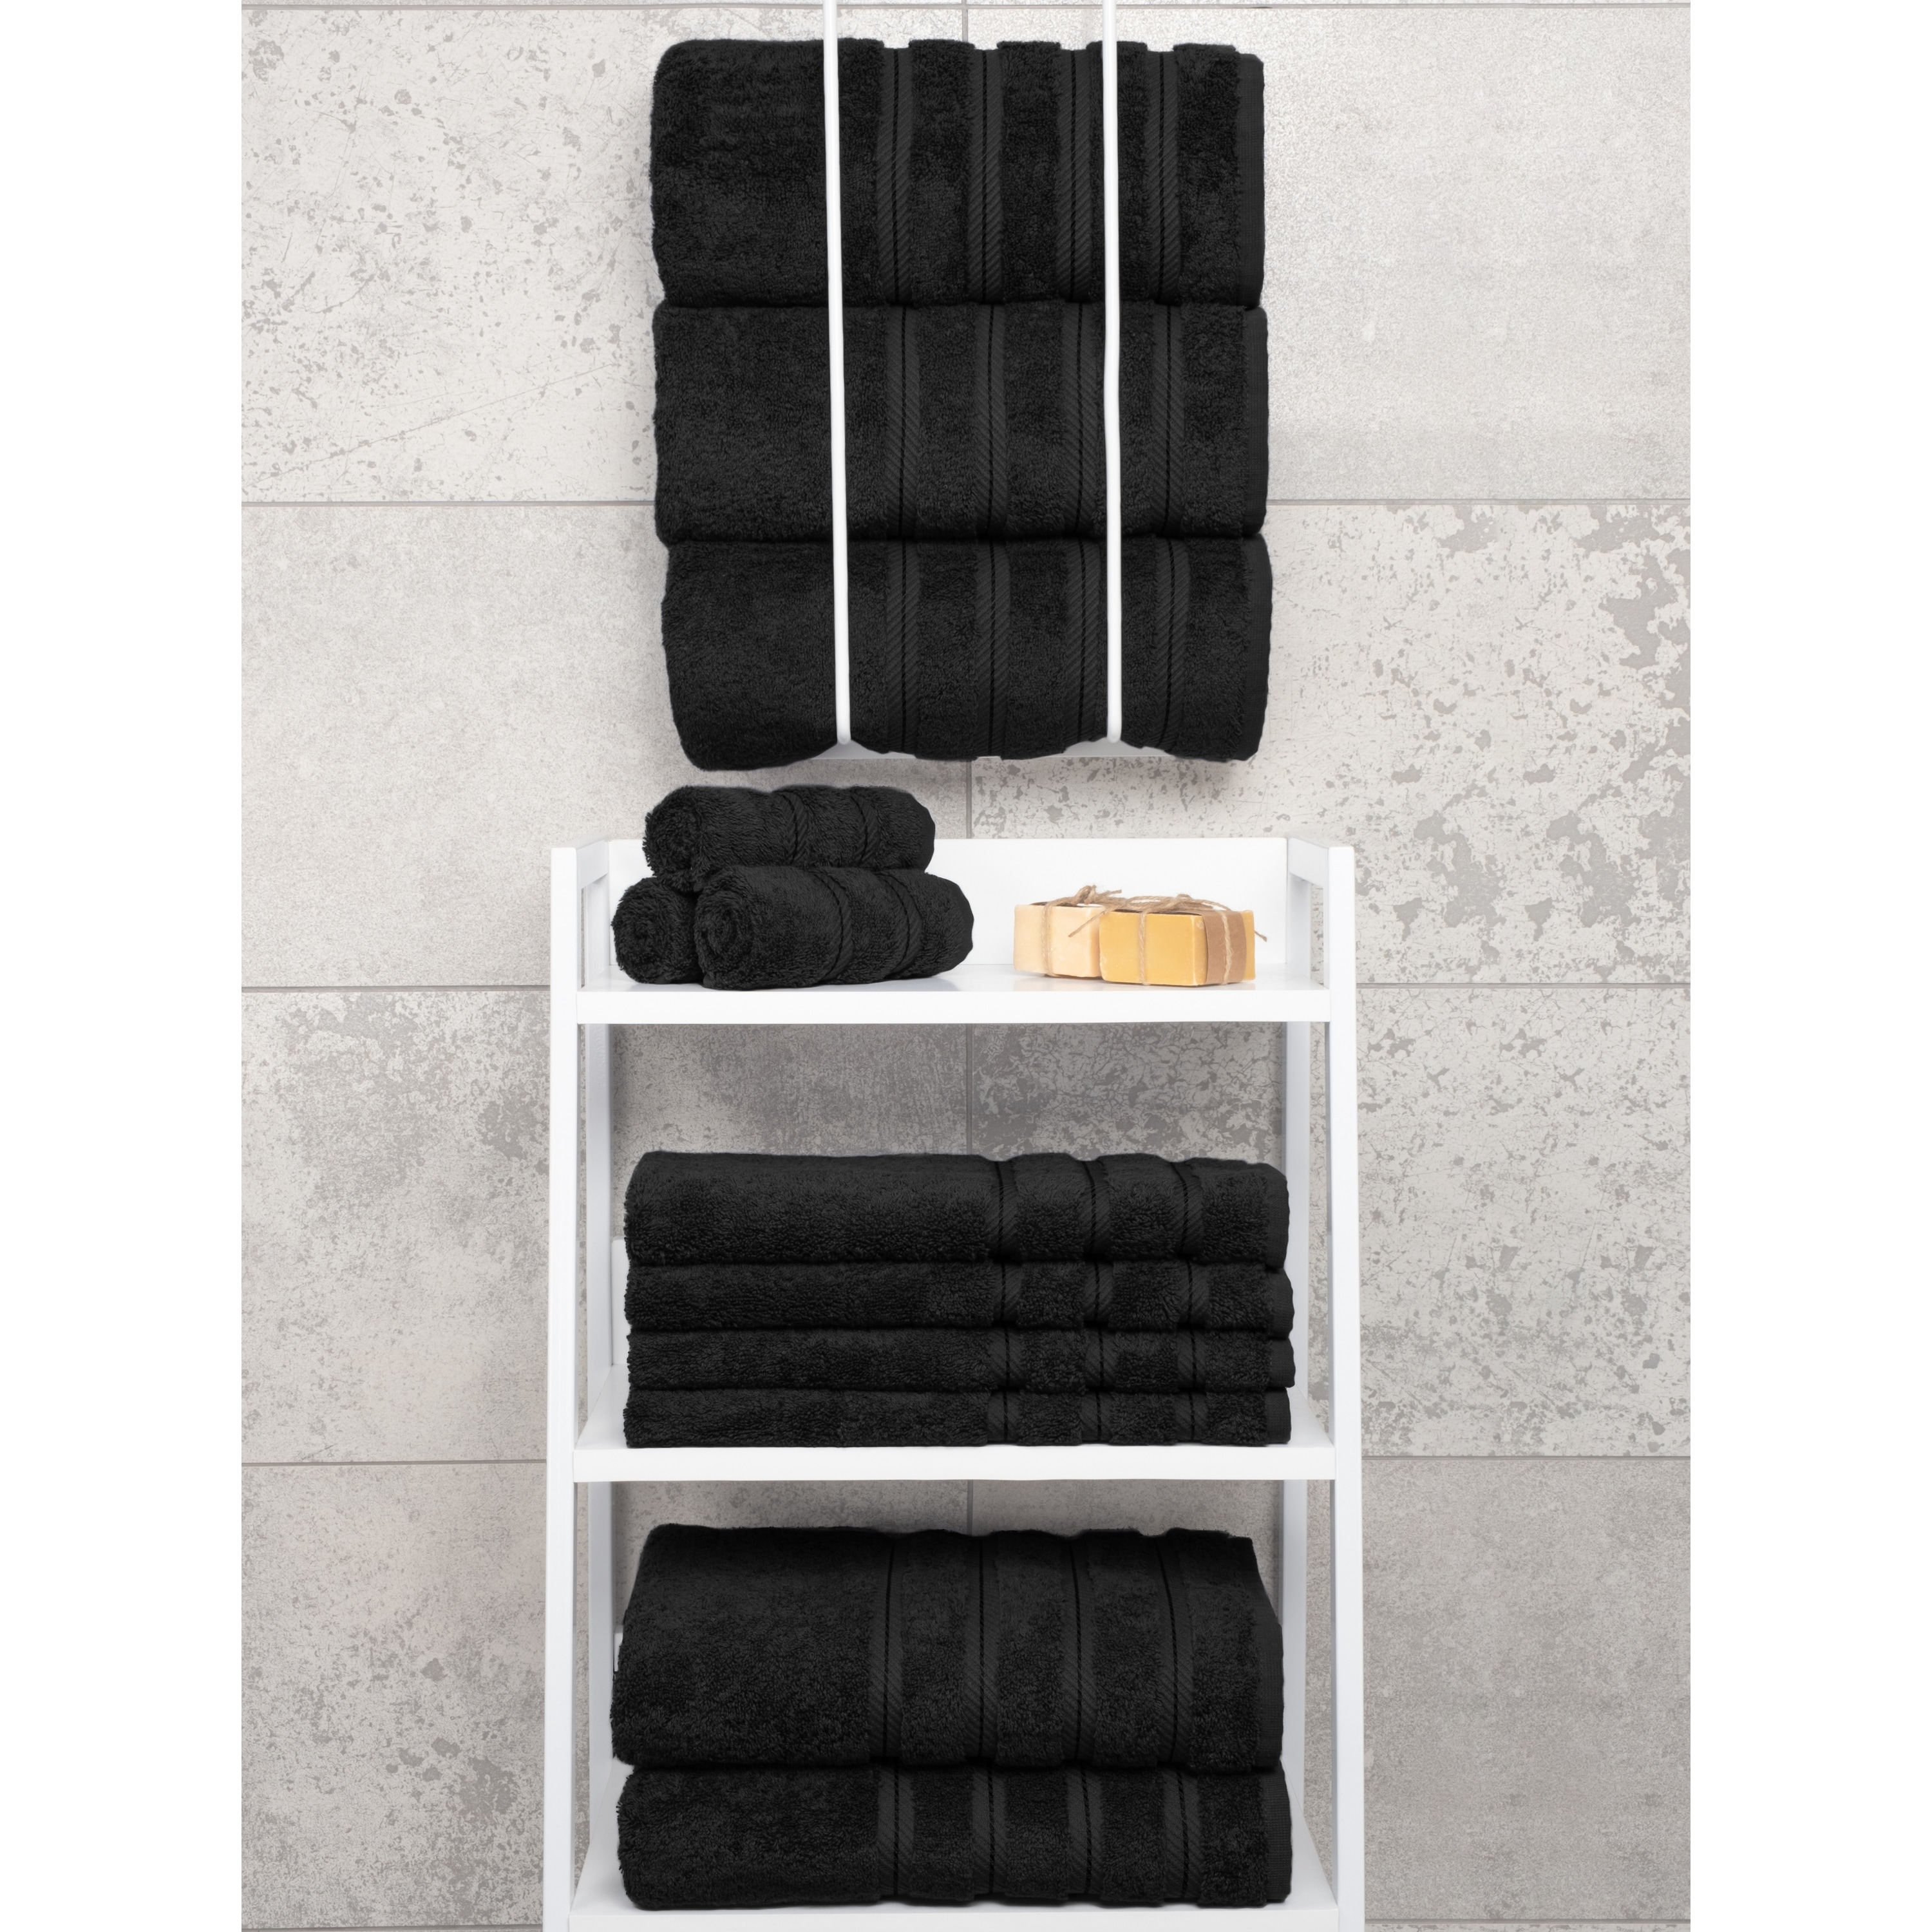 https://ak1.ostkcdn.com/images/products/is/images/direct/62bb87d3392aa367d04646c3f8e918d65356c7a8/American-Soft-Linen-Turkish-Cotton-4-Piece-Bath-Towel-Set.jpg